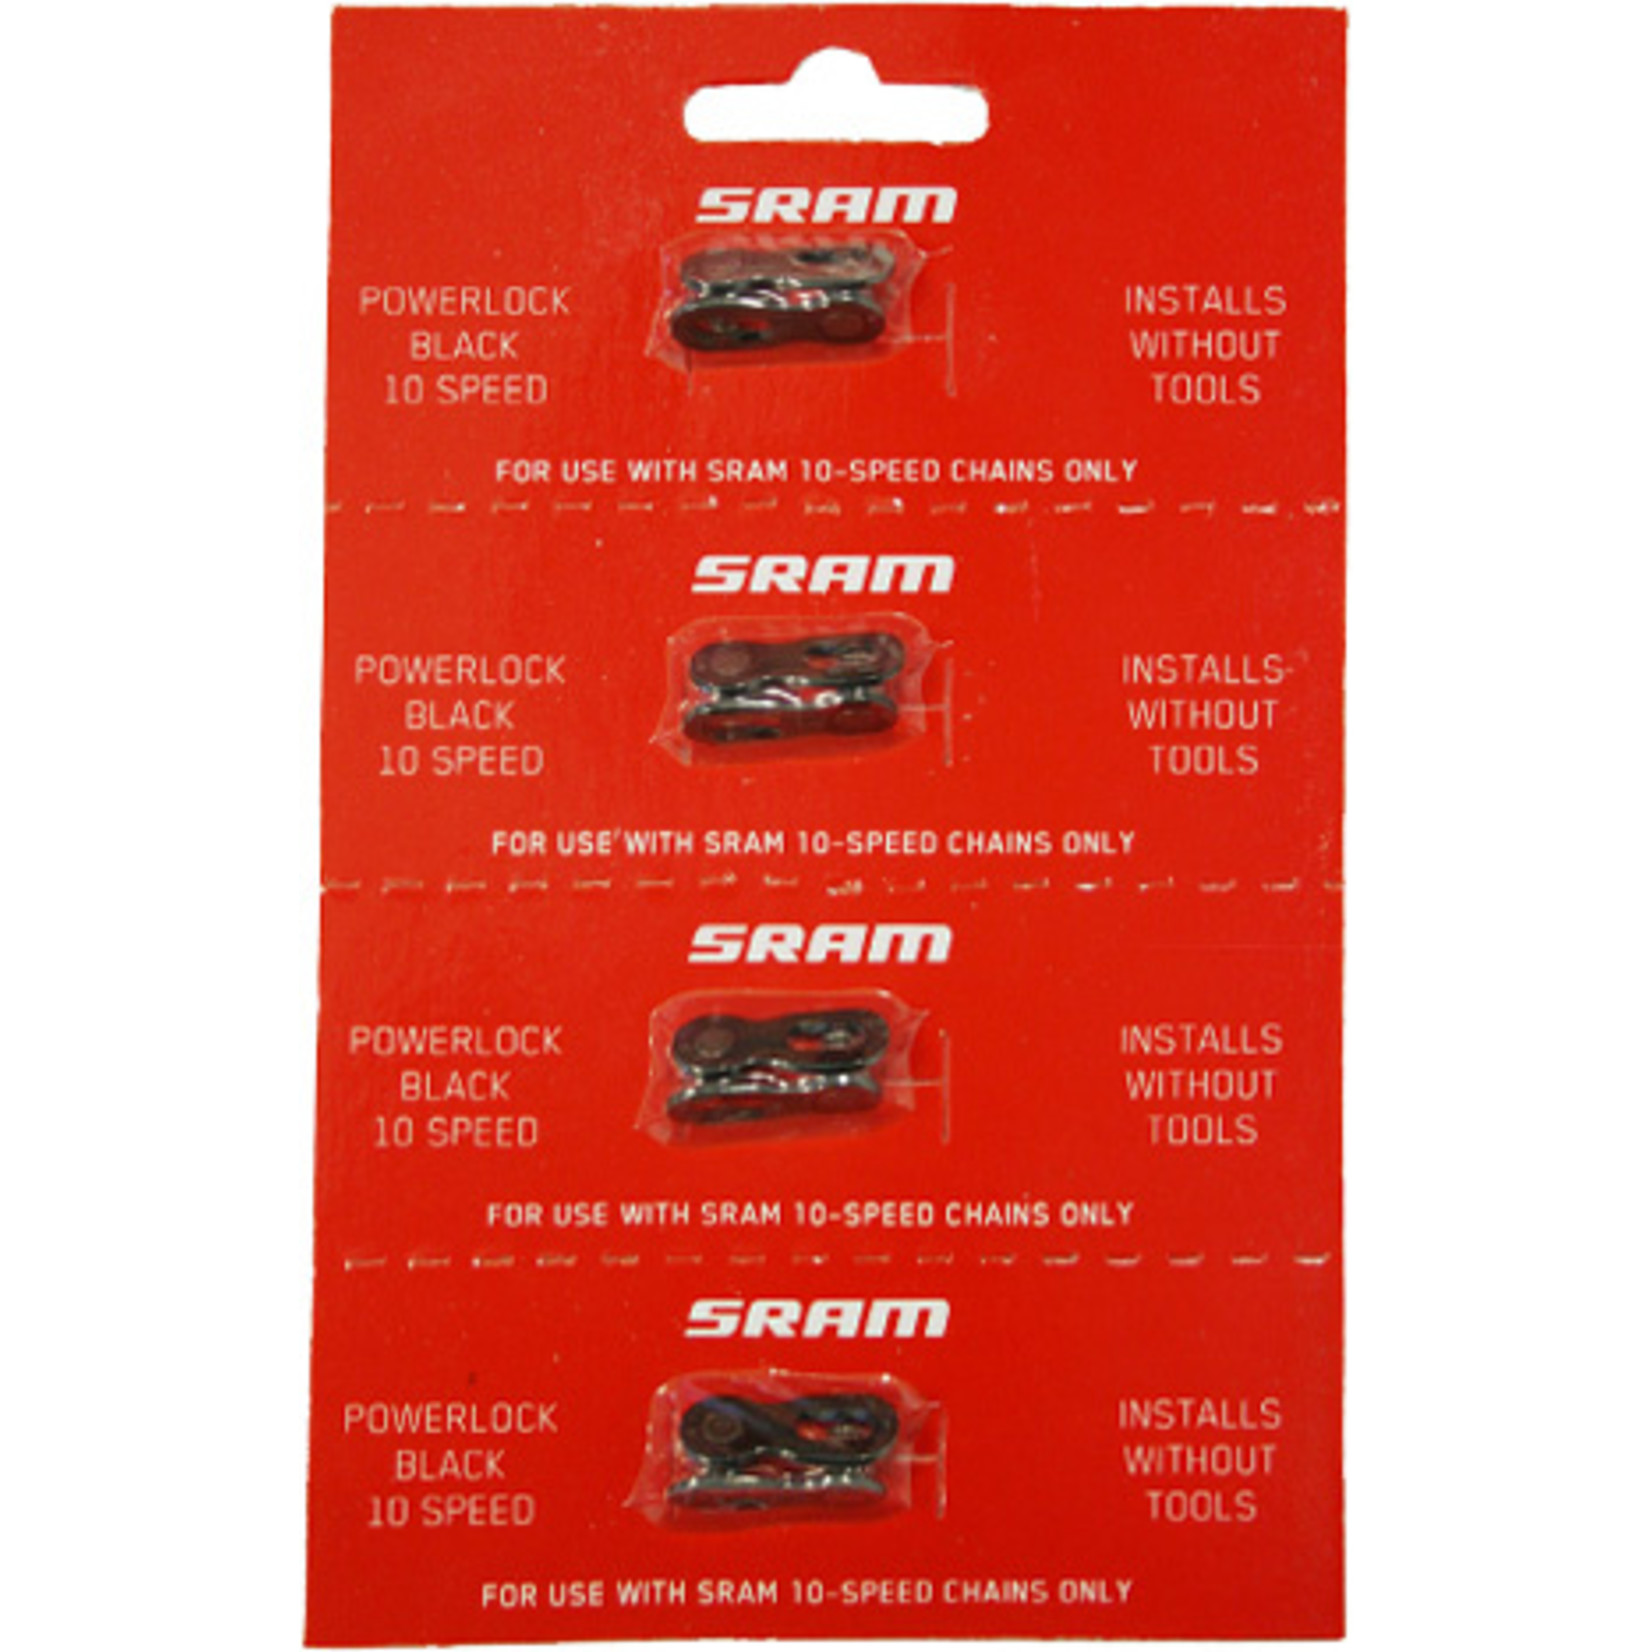 SRAM SRAM POWERLOCK BLACK 10 SPEED (4PCS)